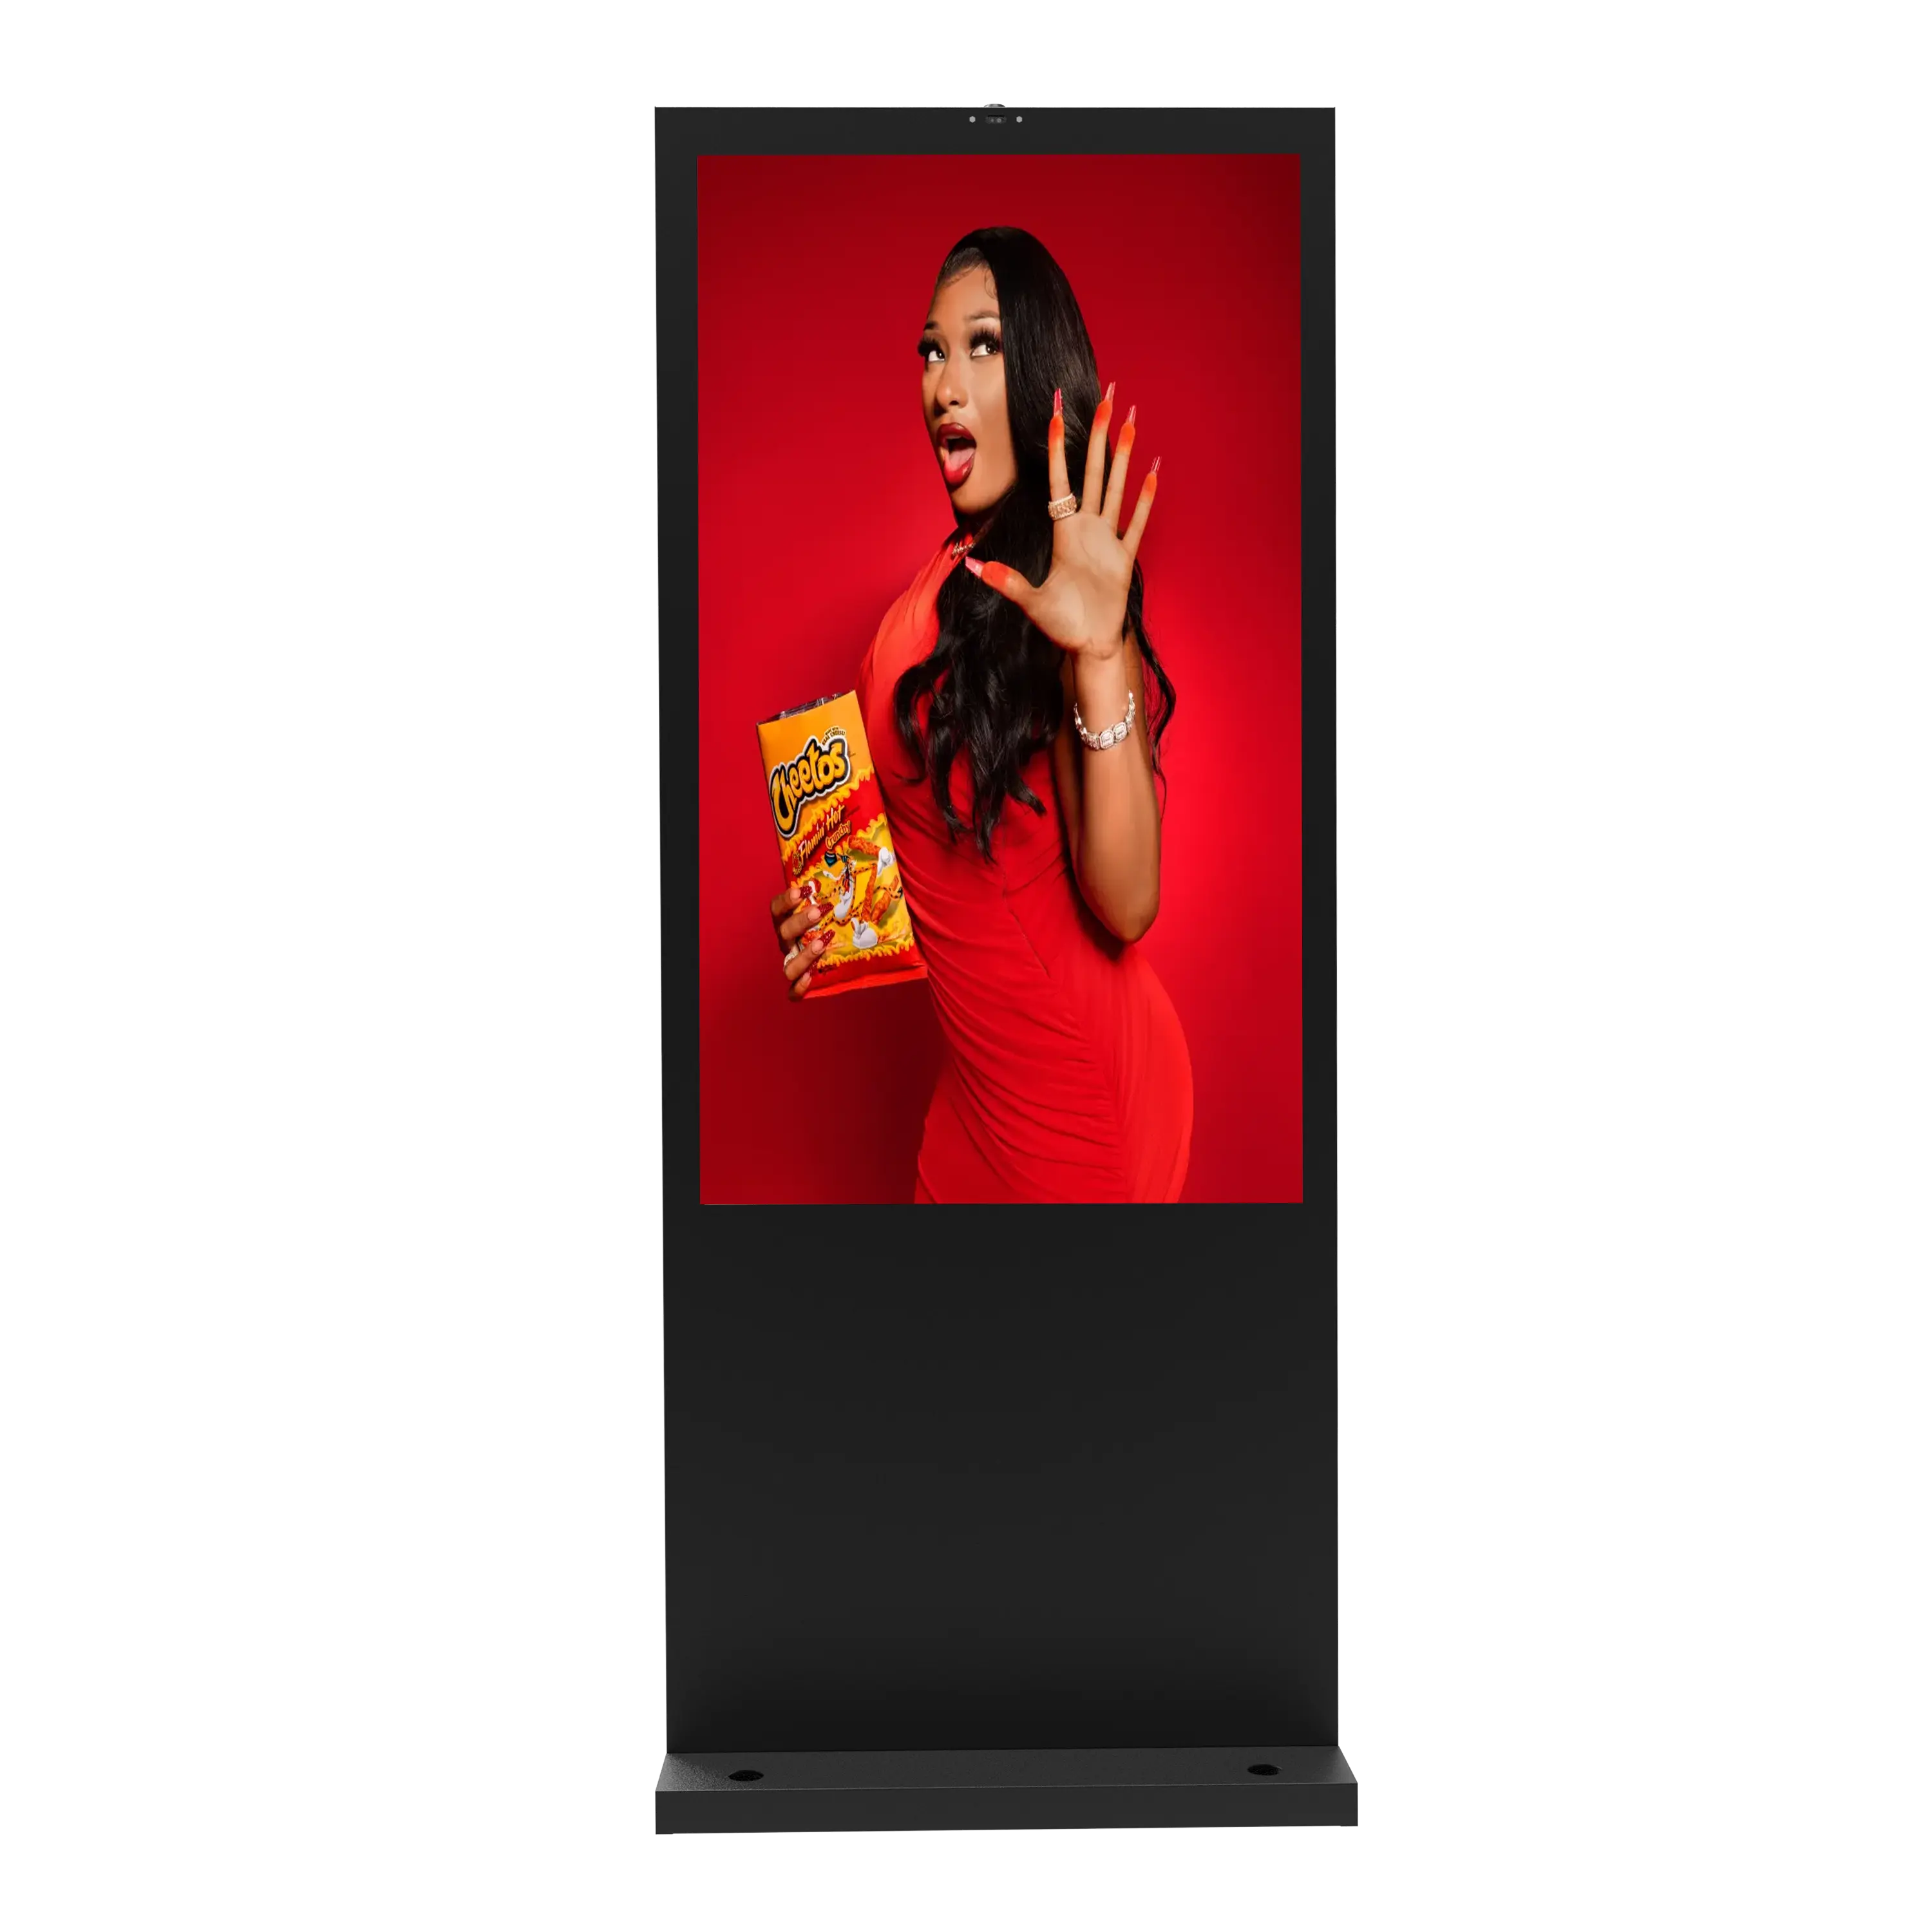 360SPB tipi B 55 inç kapalı Full HD 1080P yüksek çözünürlüklü 2000 nits LCD Video dijital tabela Android medya oynatıcı zemin standı